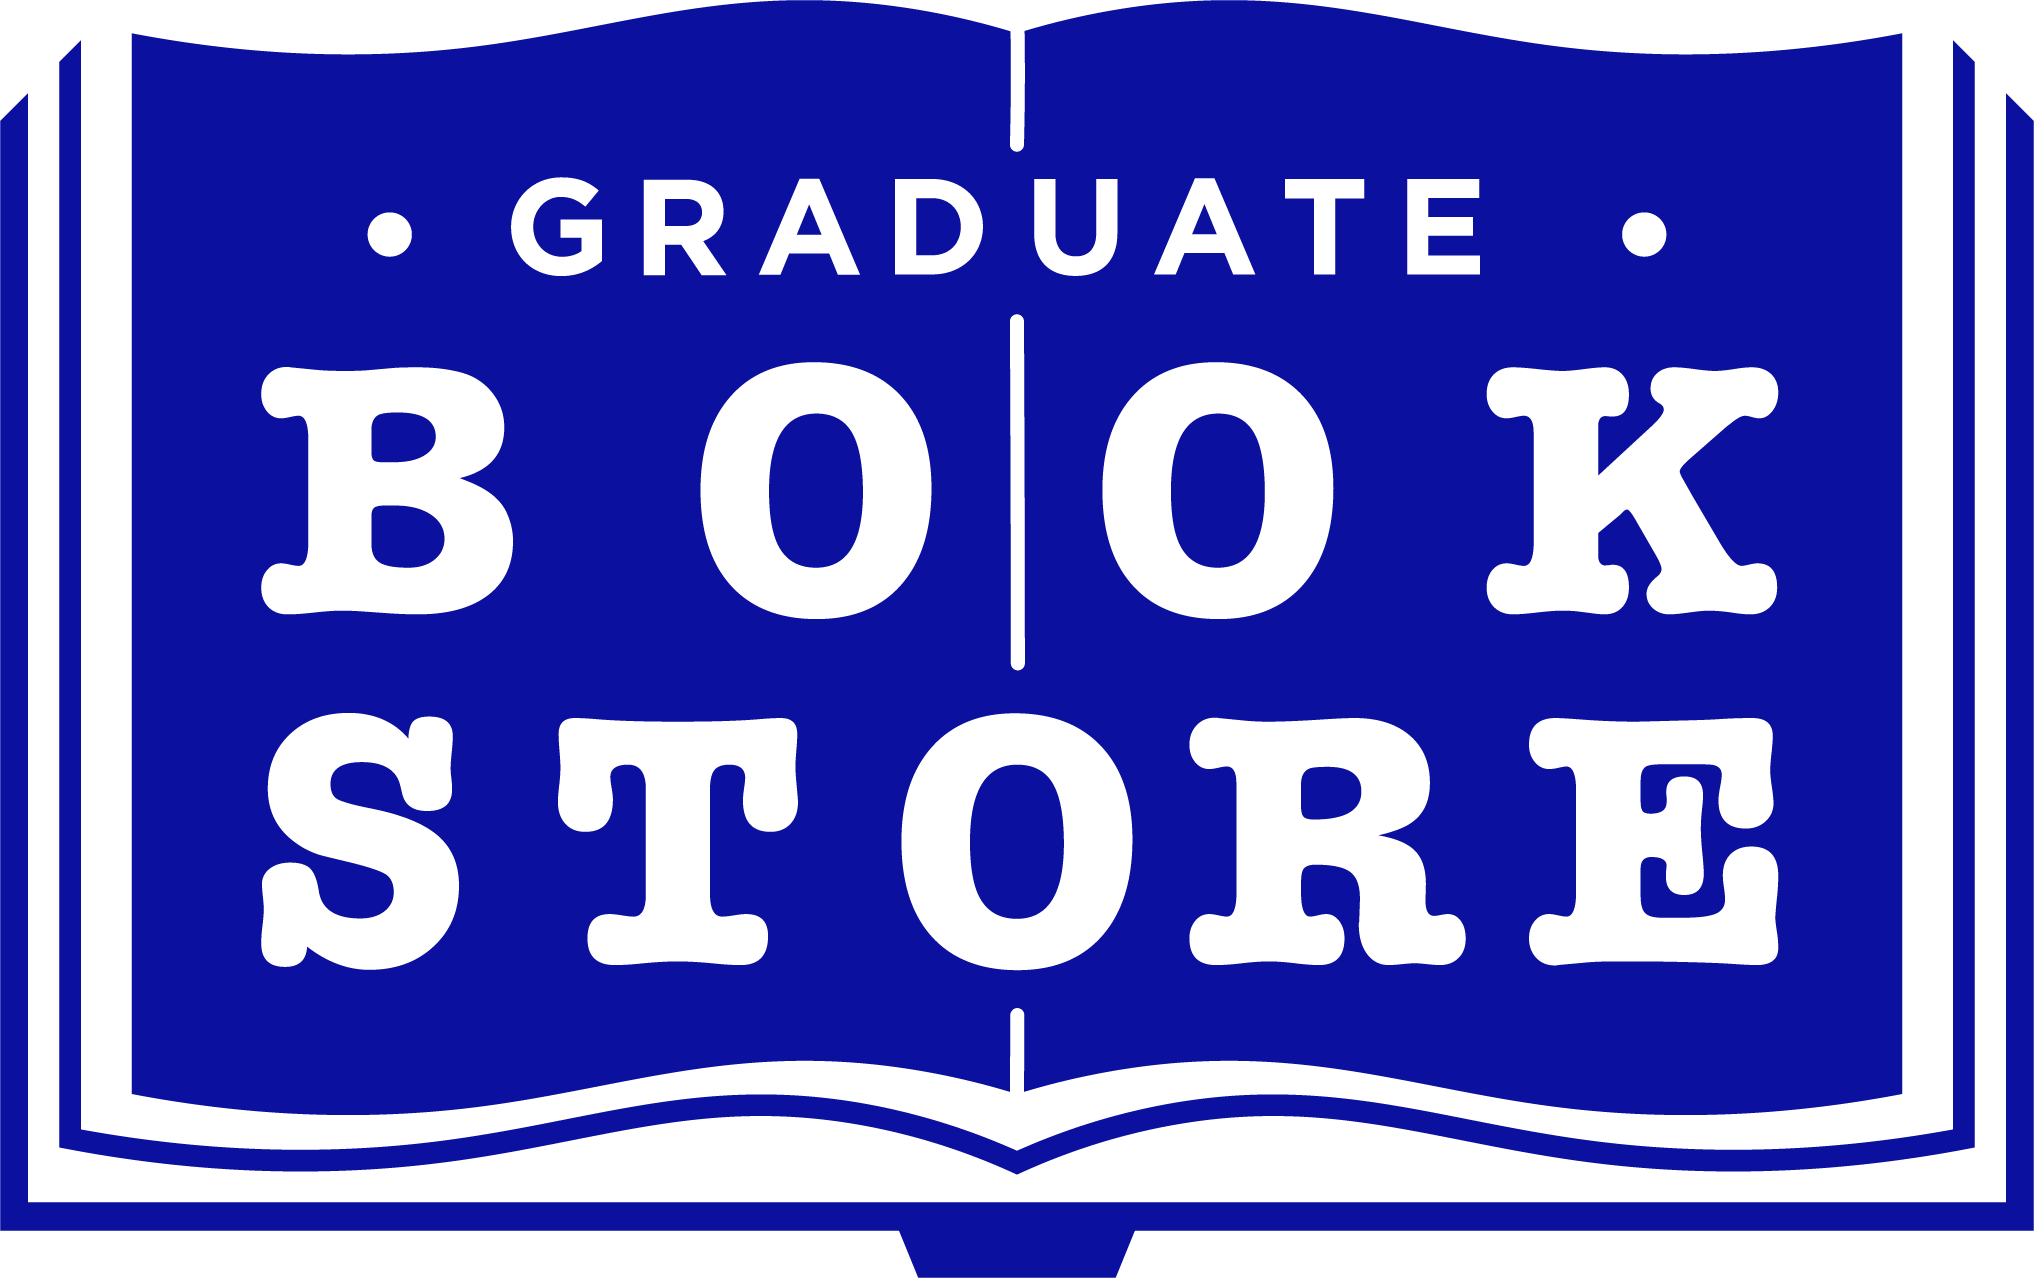 blue book logo png